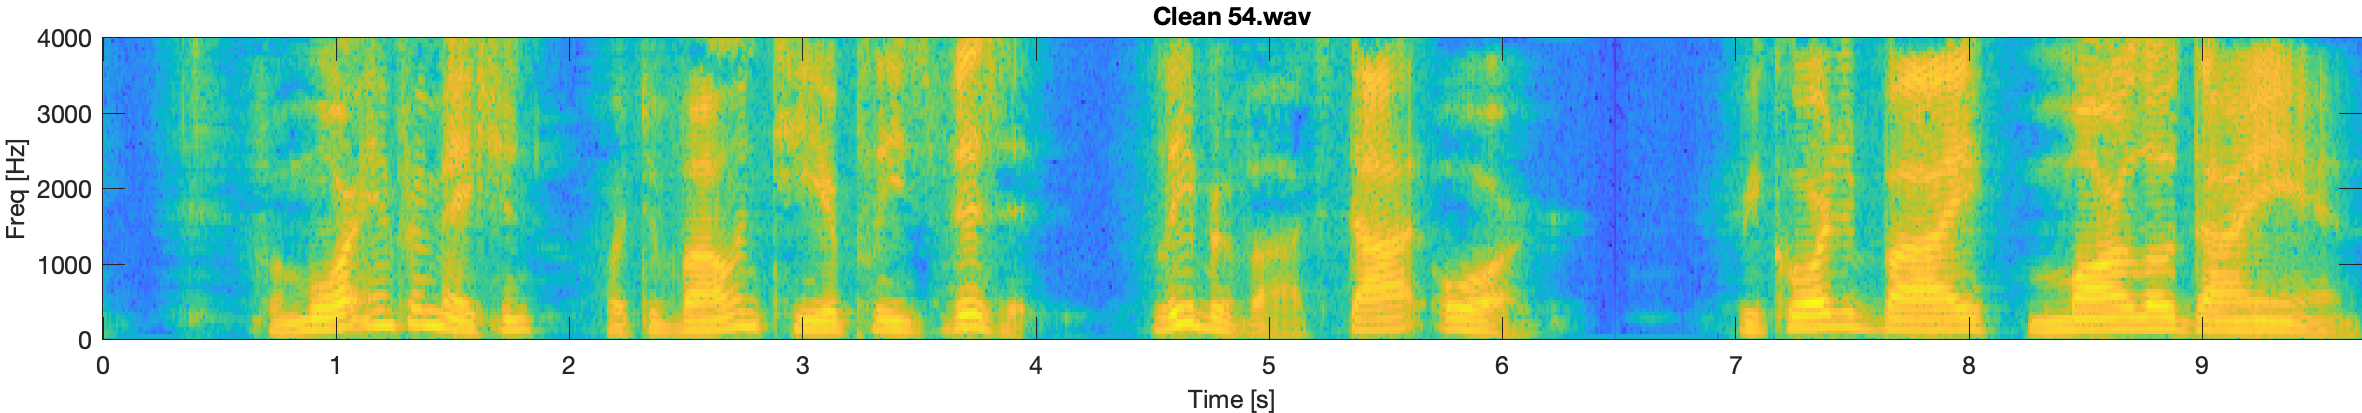 Clean spectrogram 54.wav